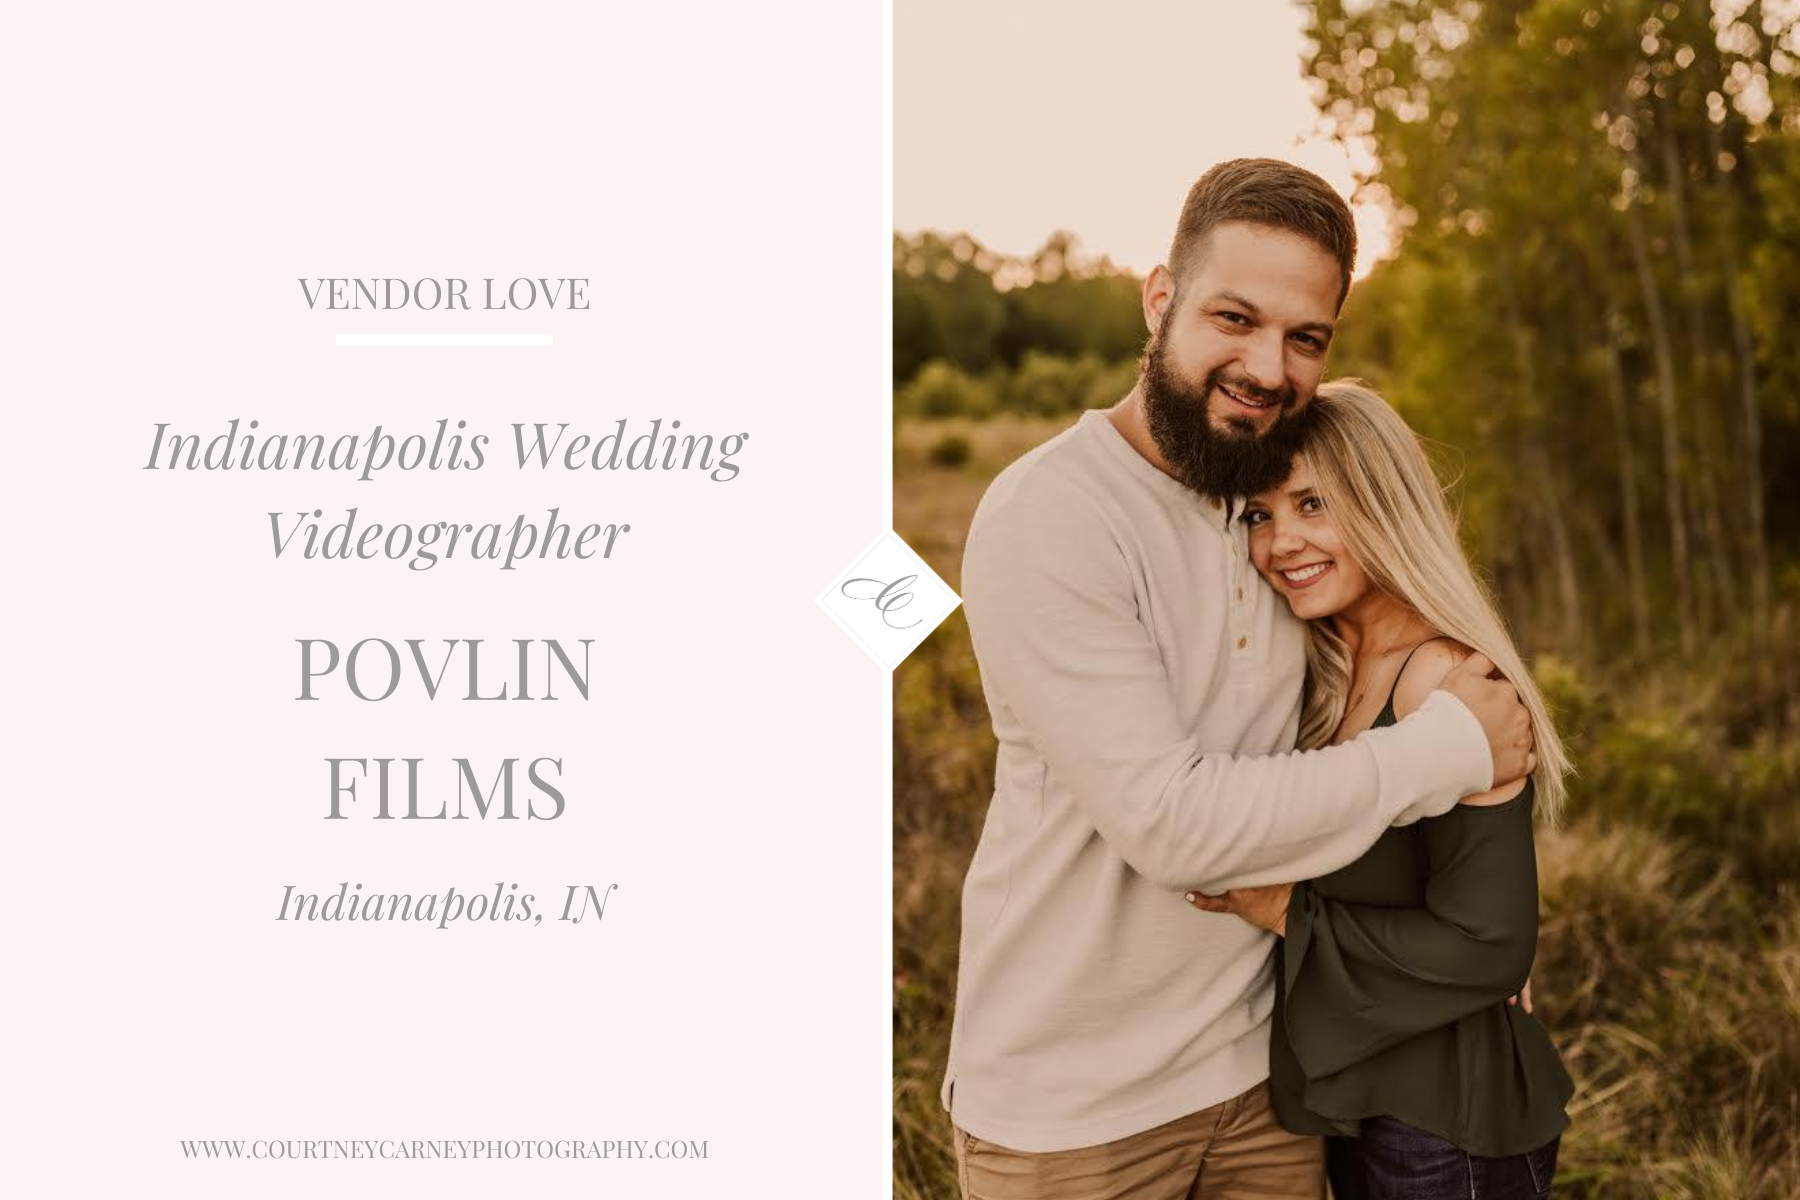 Indianapolis Wedding Videographer Povlin Films